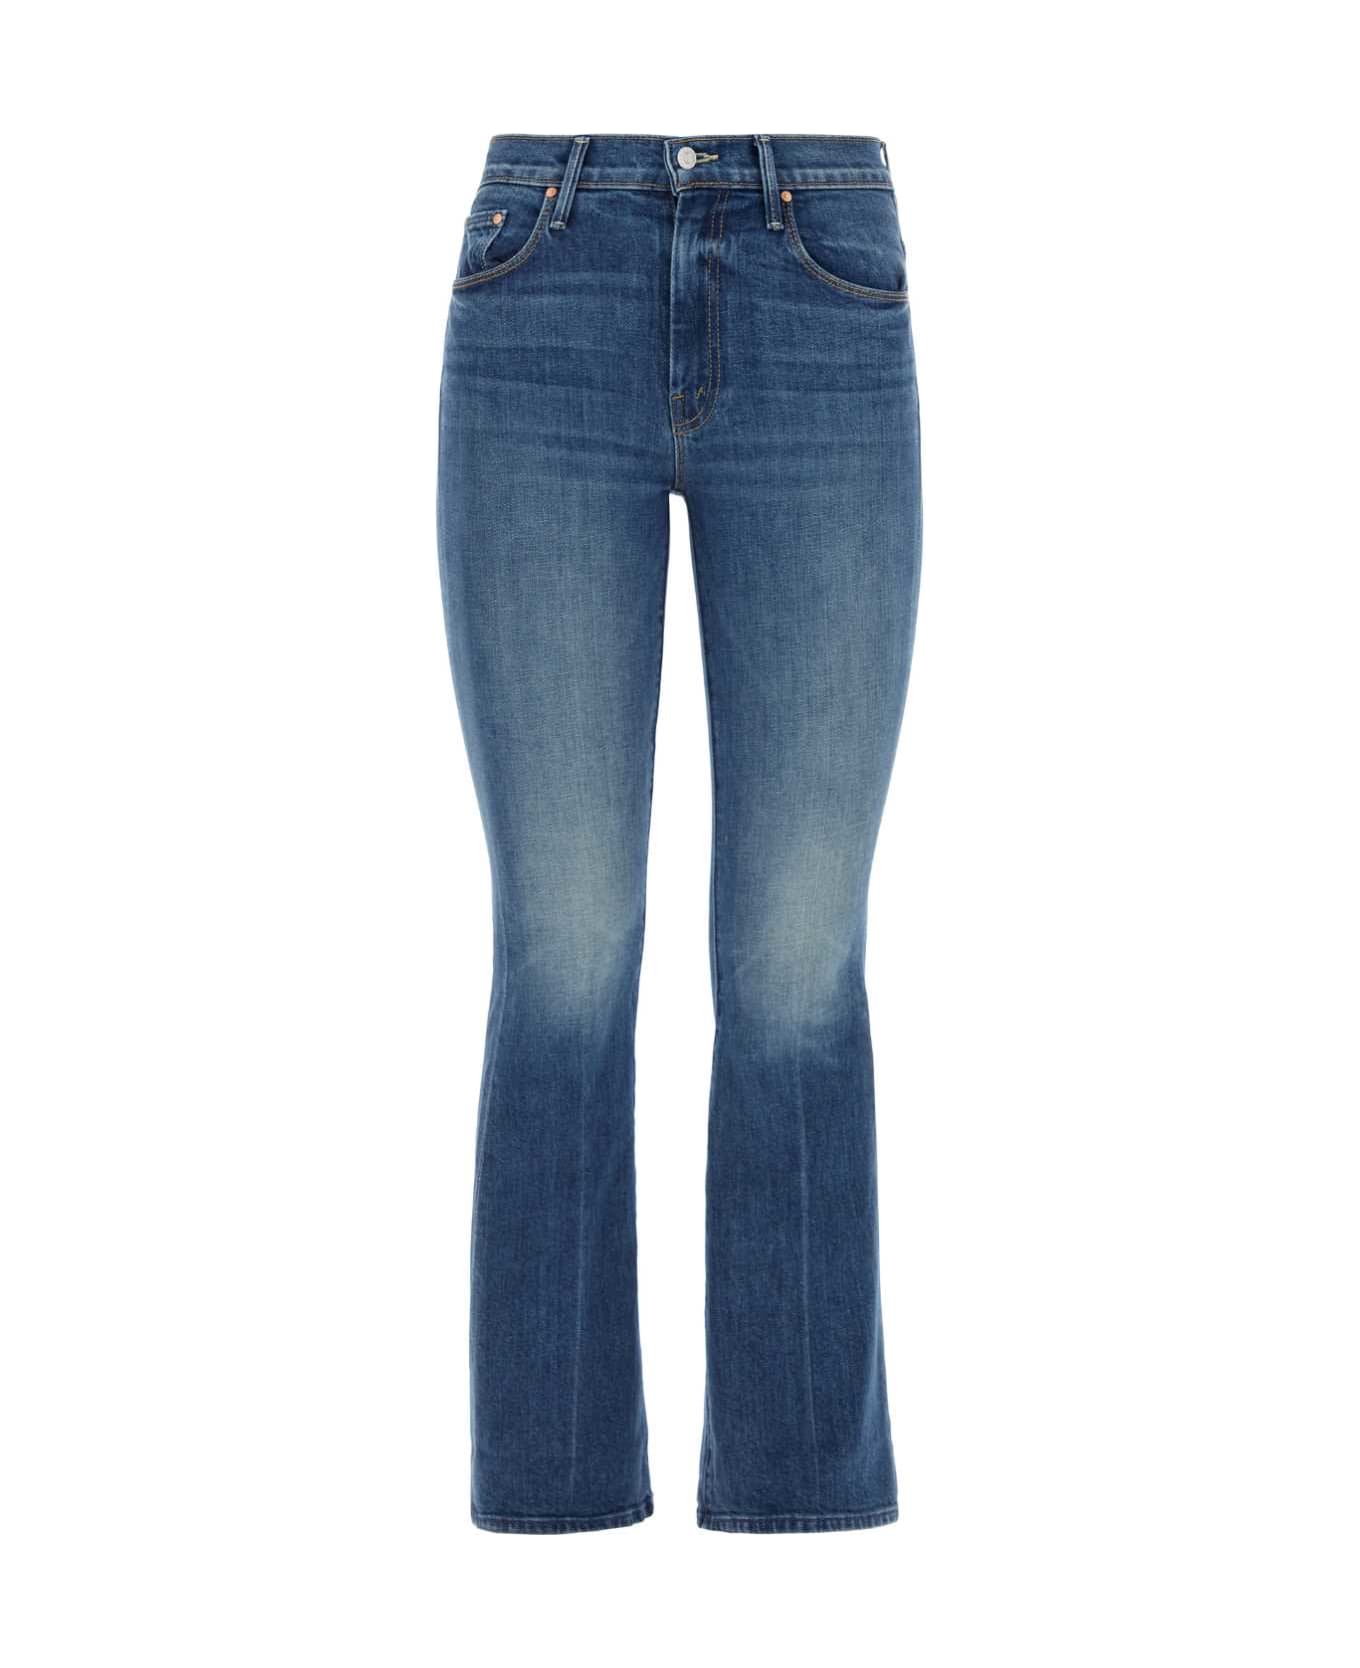 Mother Denim The Weekender Jeans - IT'SASMALLWORLD